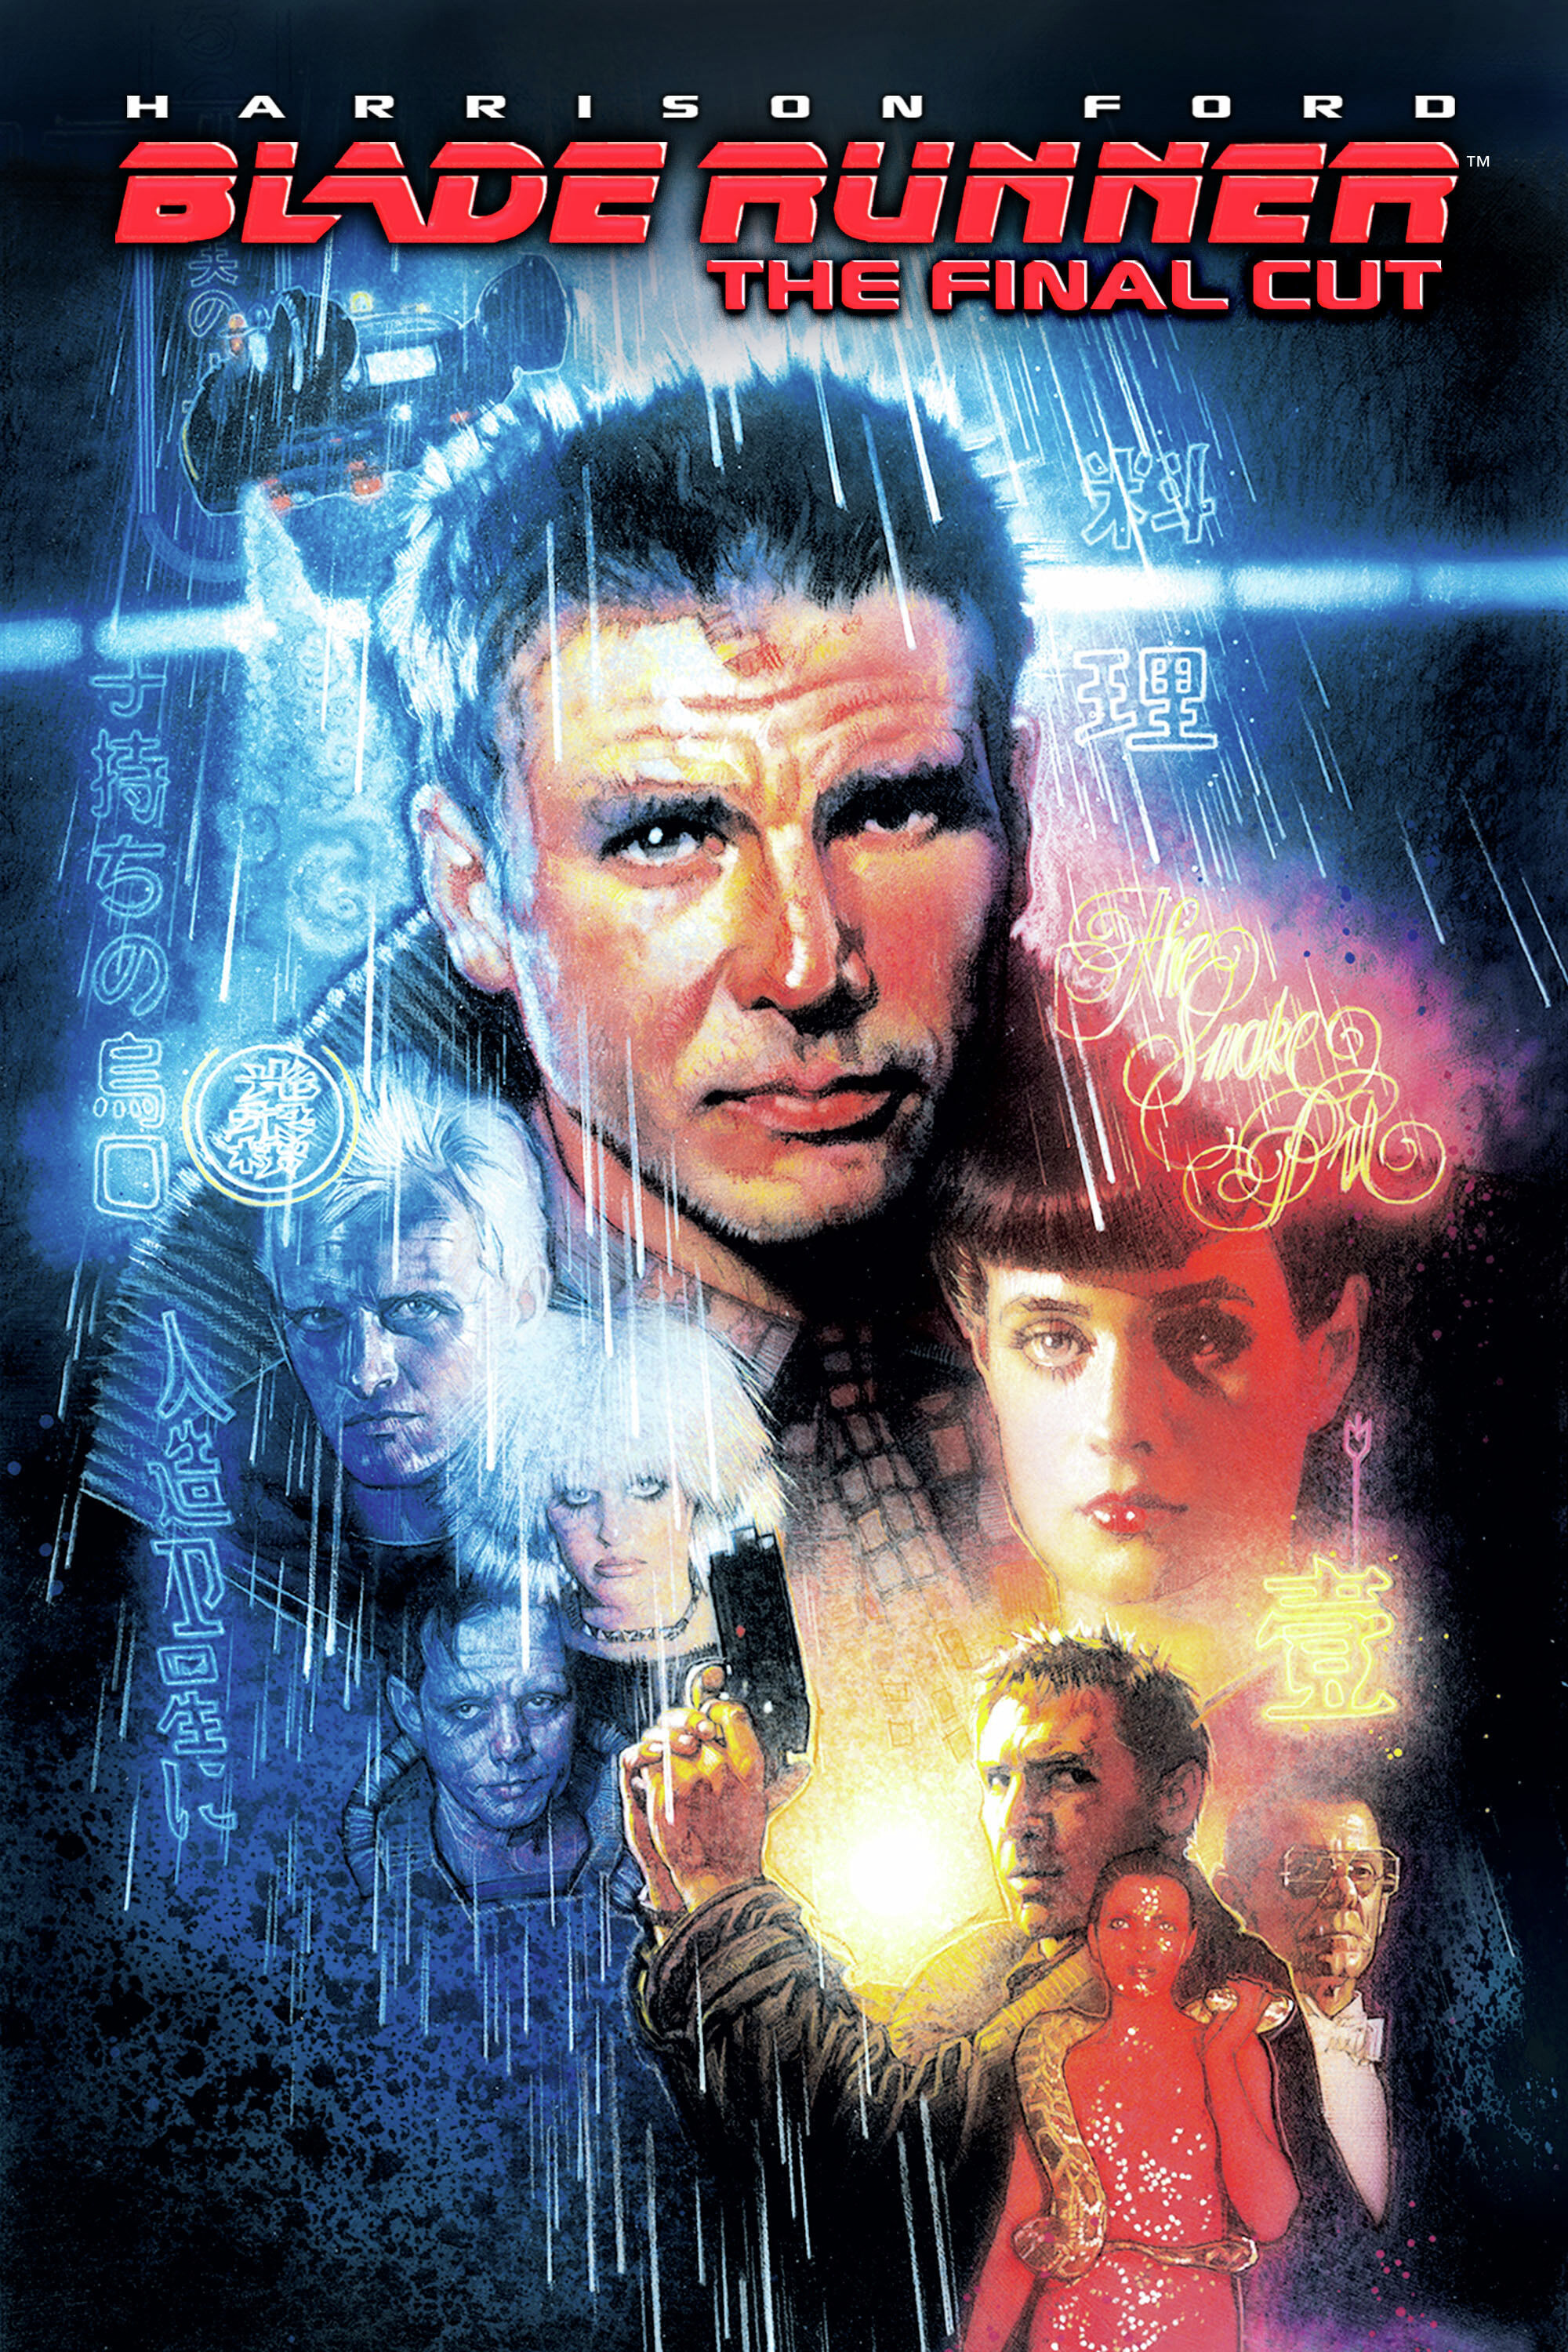 Blade Runner: The Final Cut (DVD Final Cut) - DVD [ 1982 ]  - Sci Fi Movies On DVD - Movies On GRUV